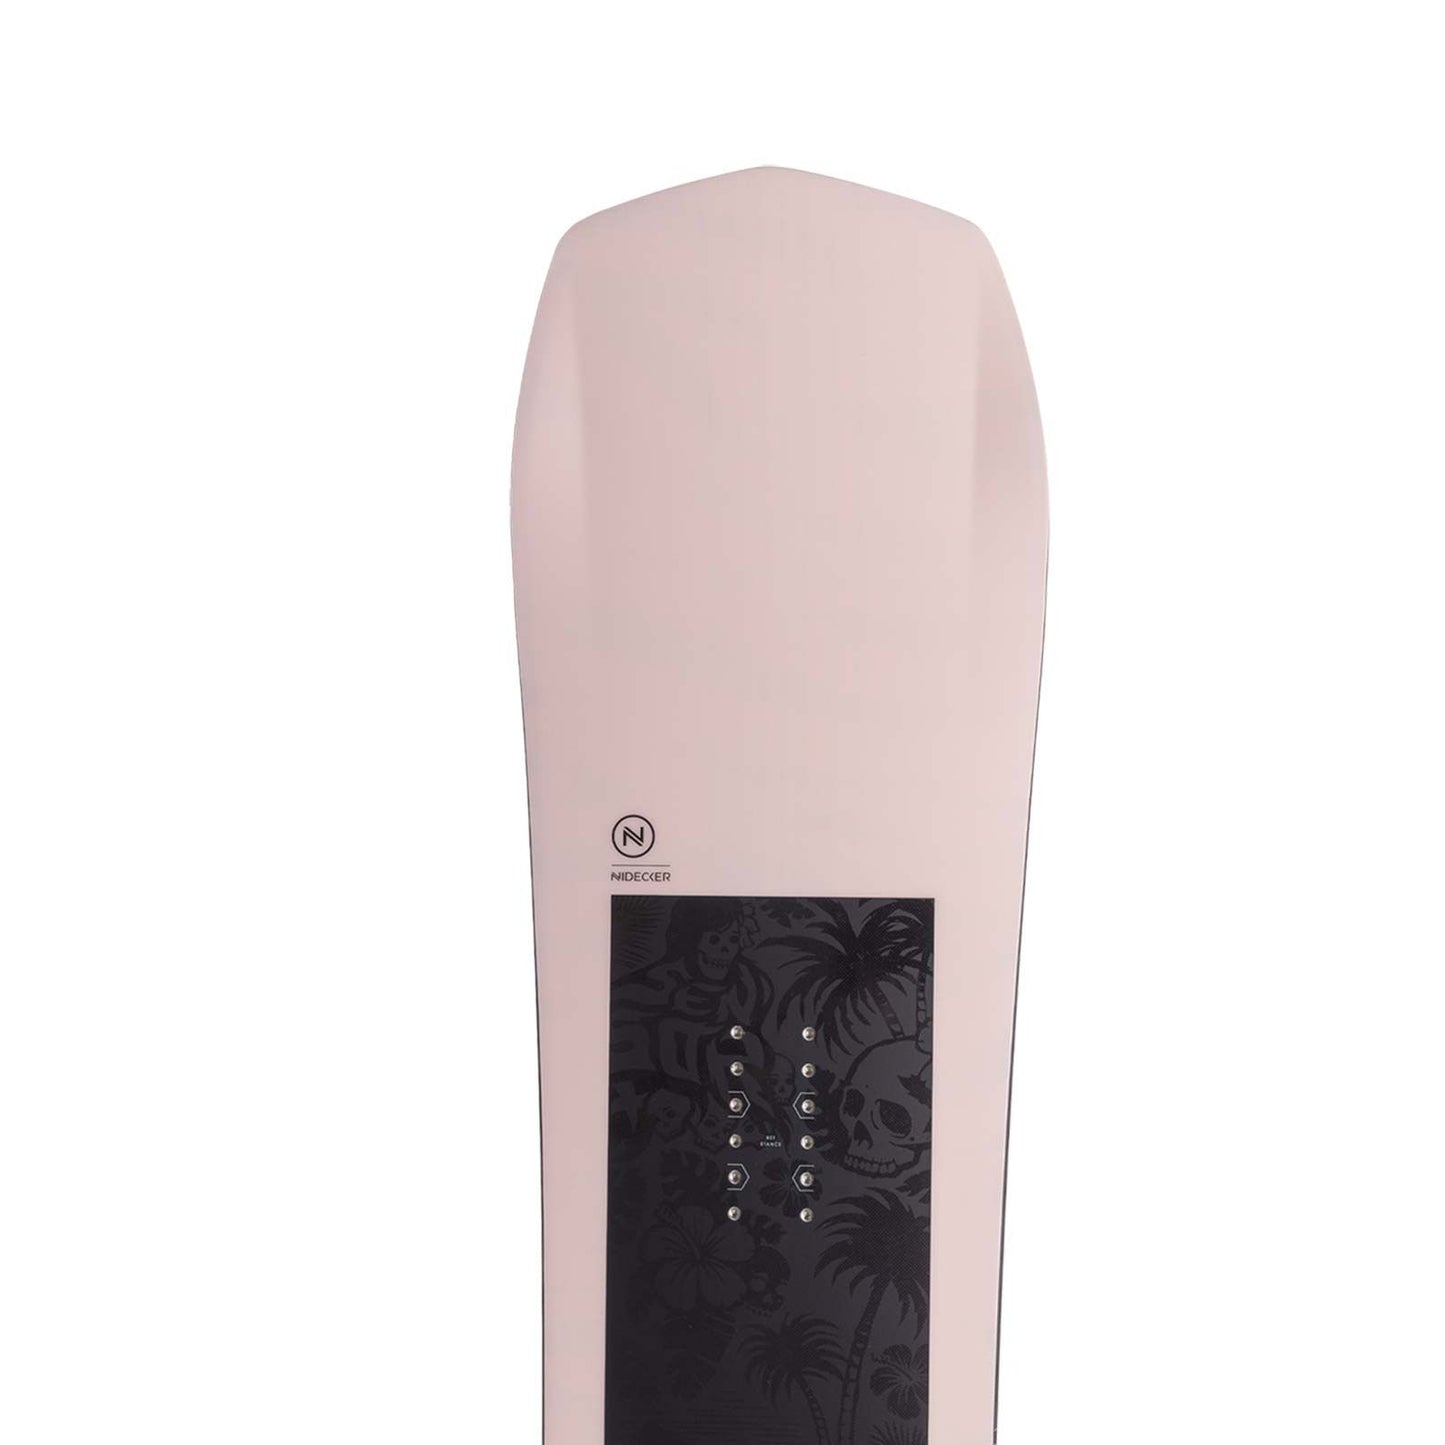 Nidecker Sensor Plus Snowboard 2024 159W Snowboards